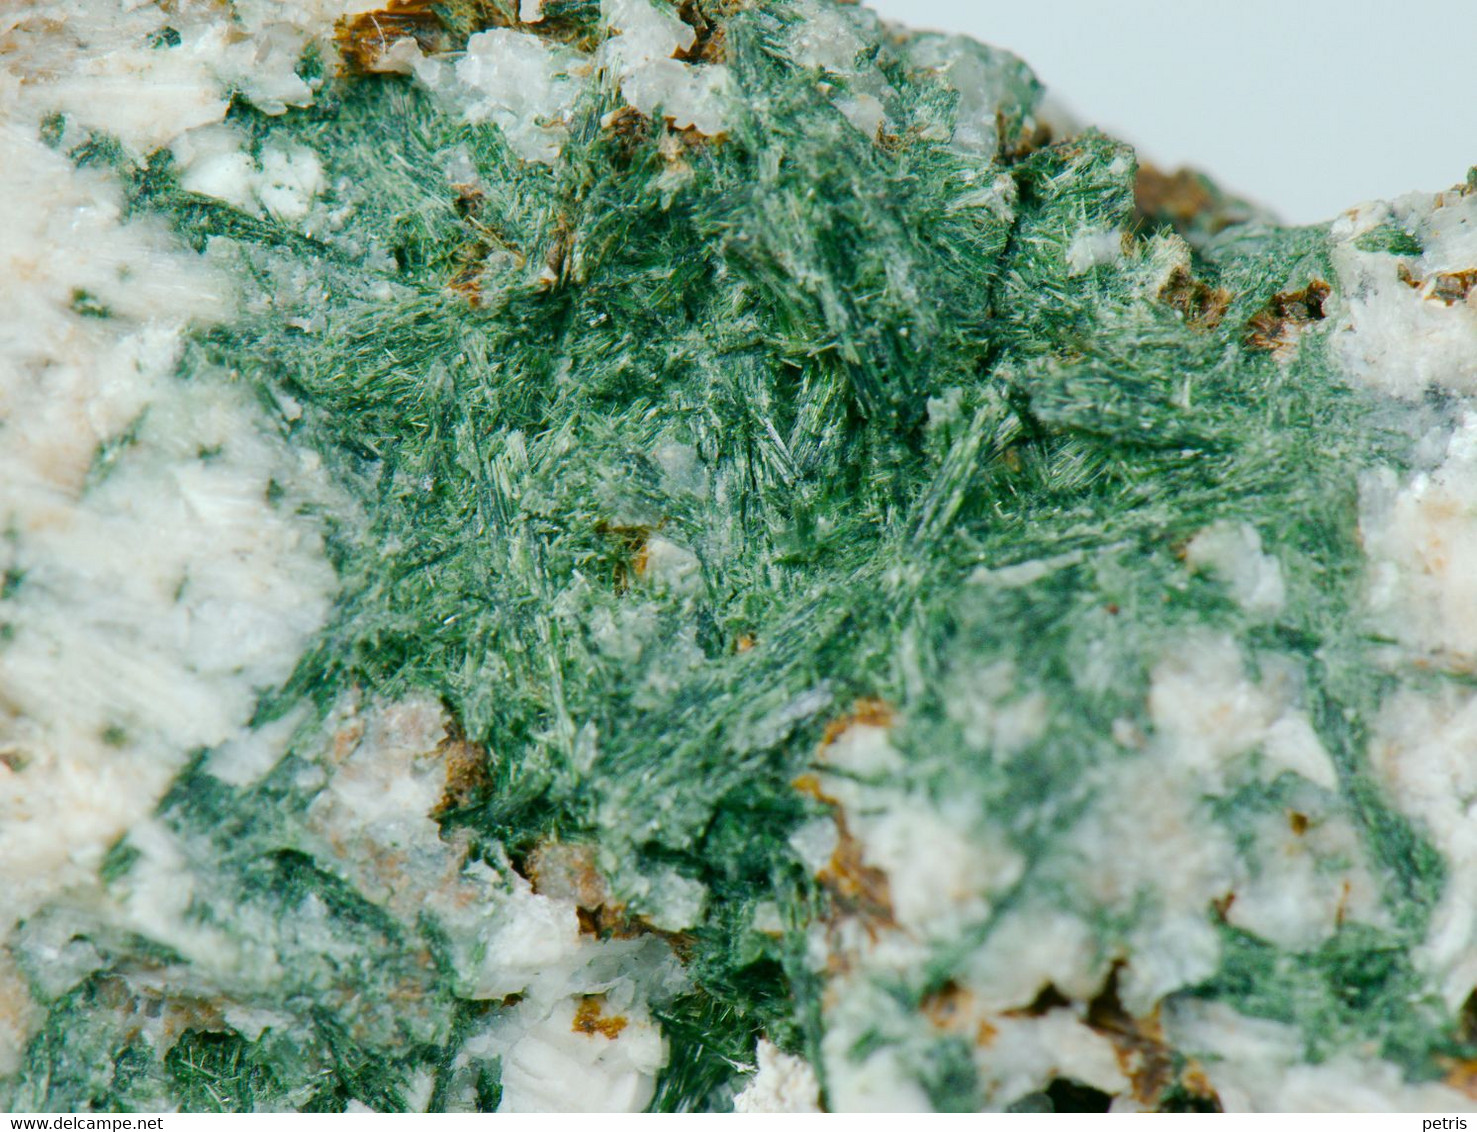 Small but beauty - Zirconi, Aegirina e natrolite (Penisola di Kola, Russia) - Lot. S 760